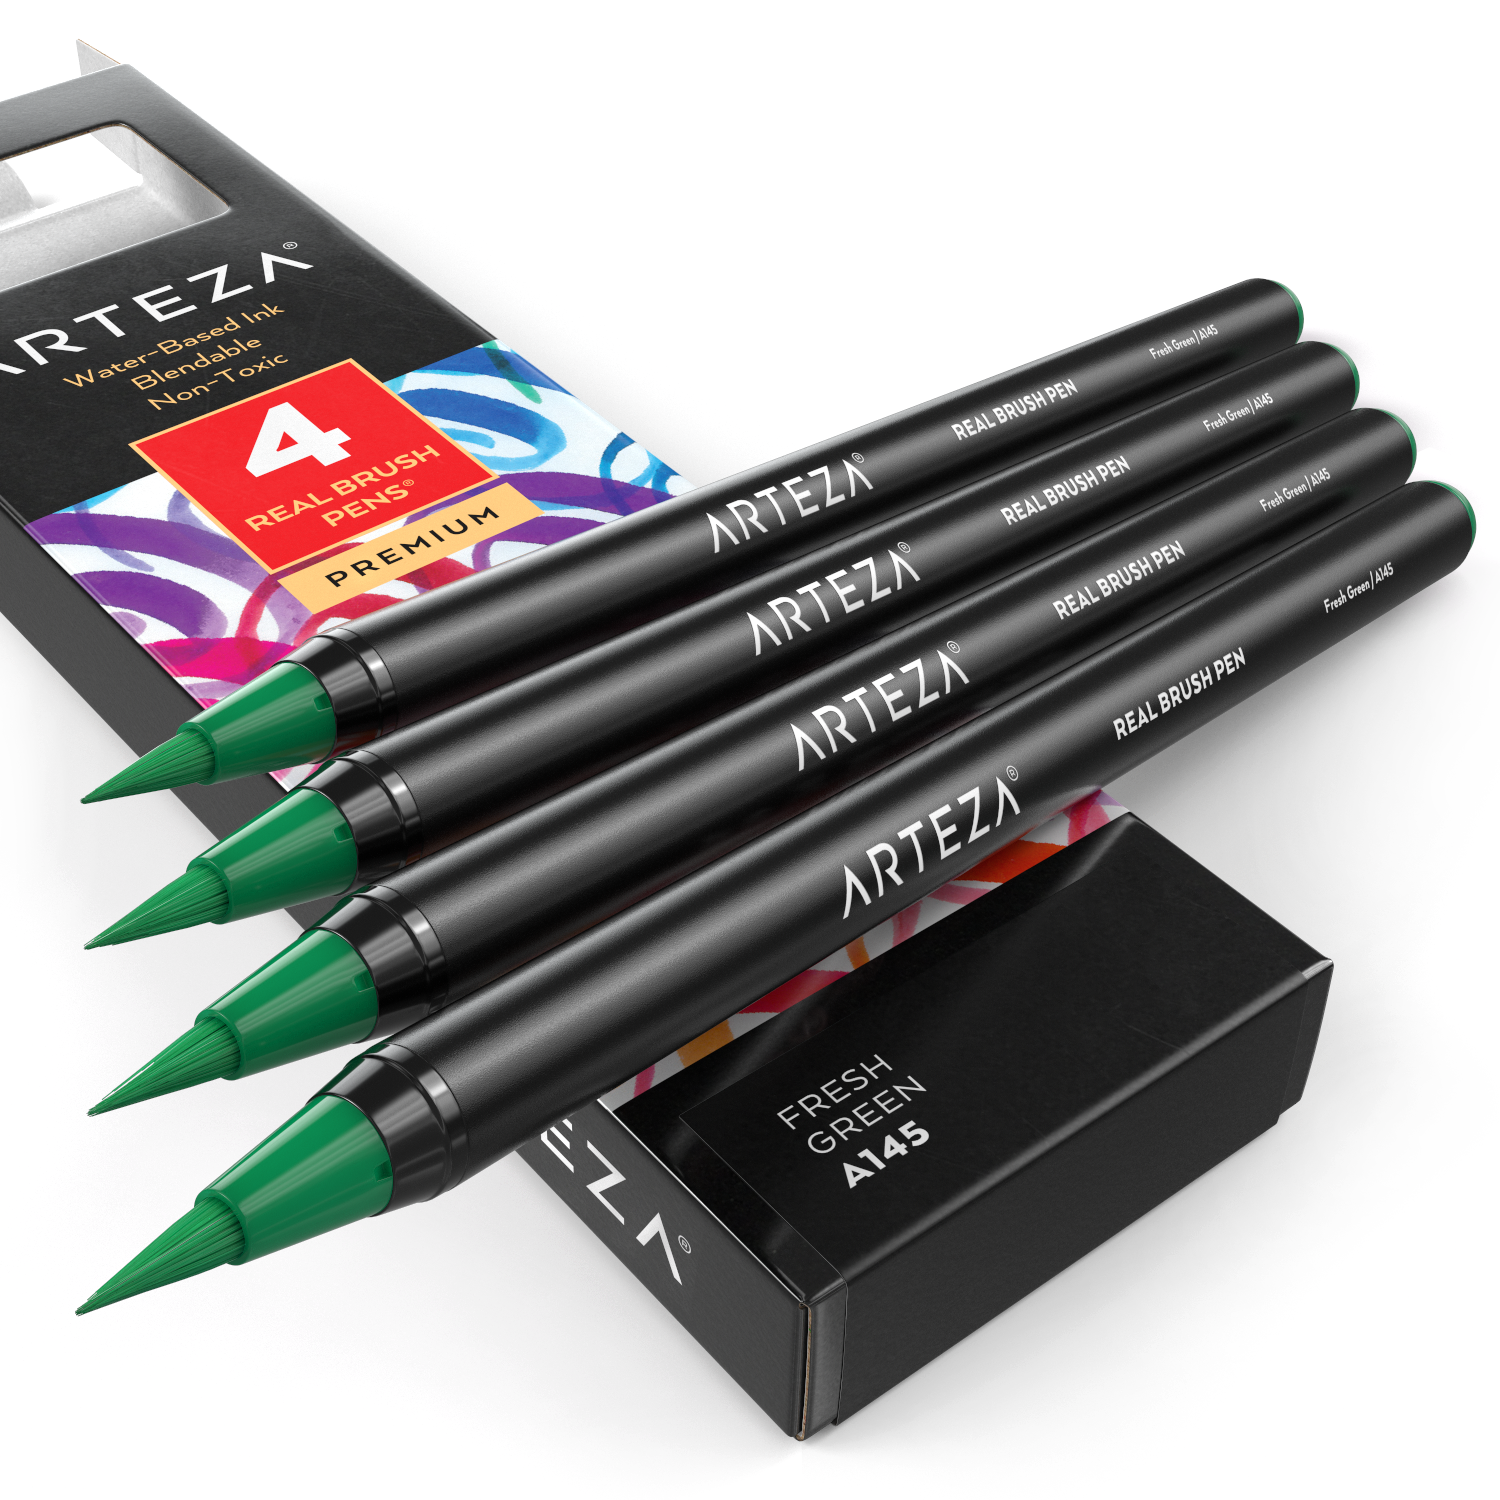 Arteza Real Brush Pens Demo & Review 